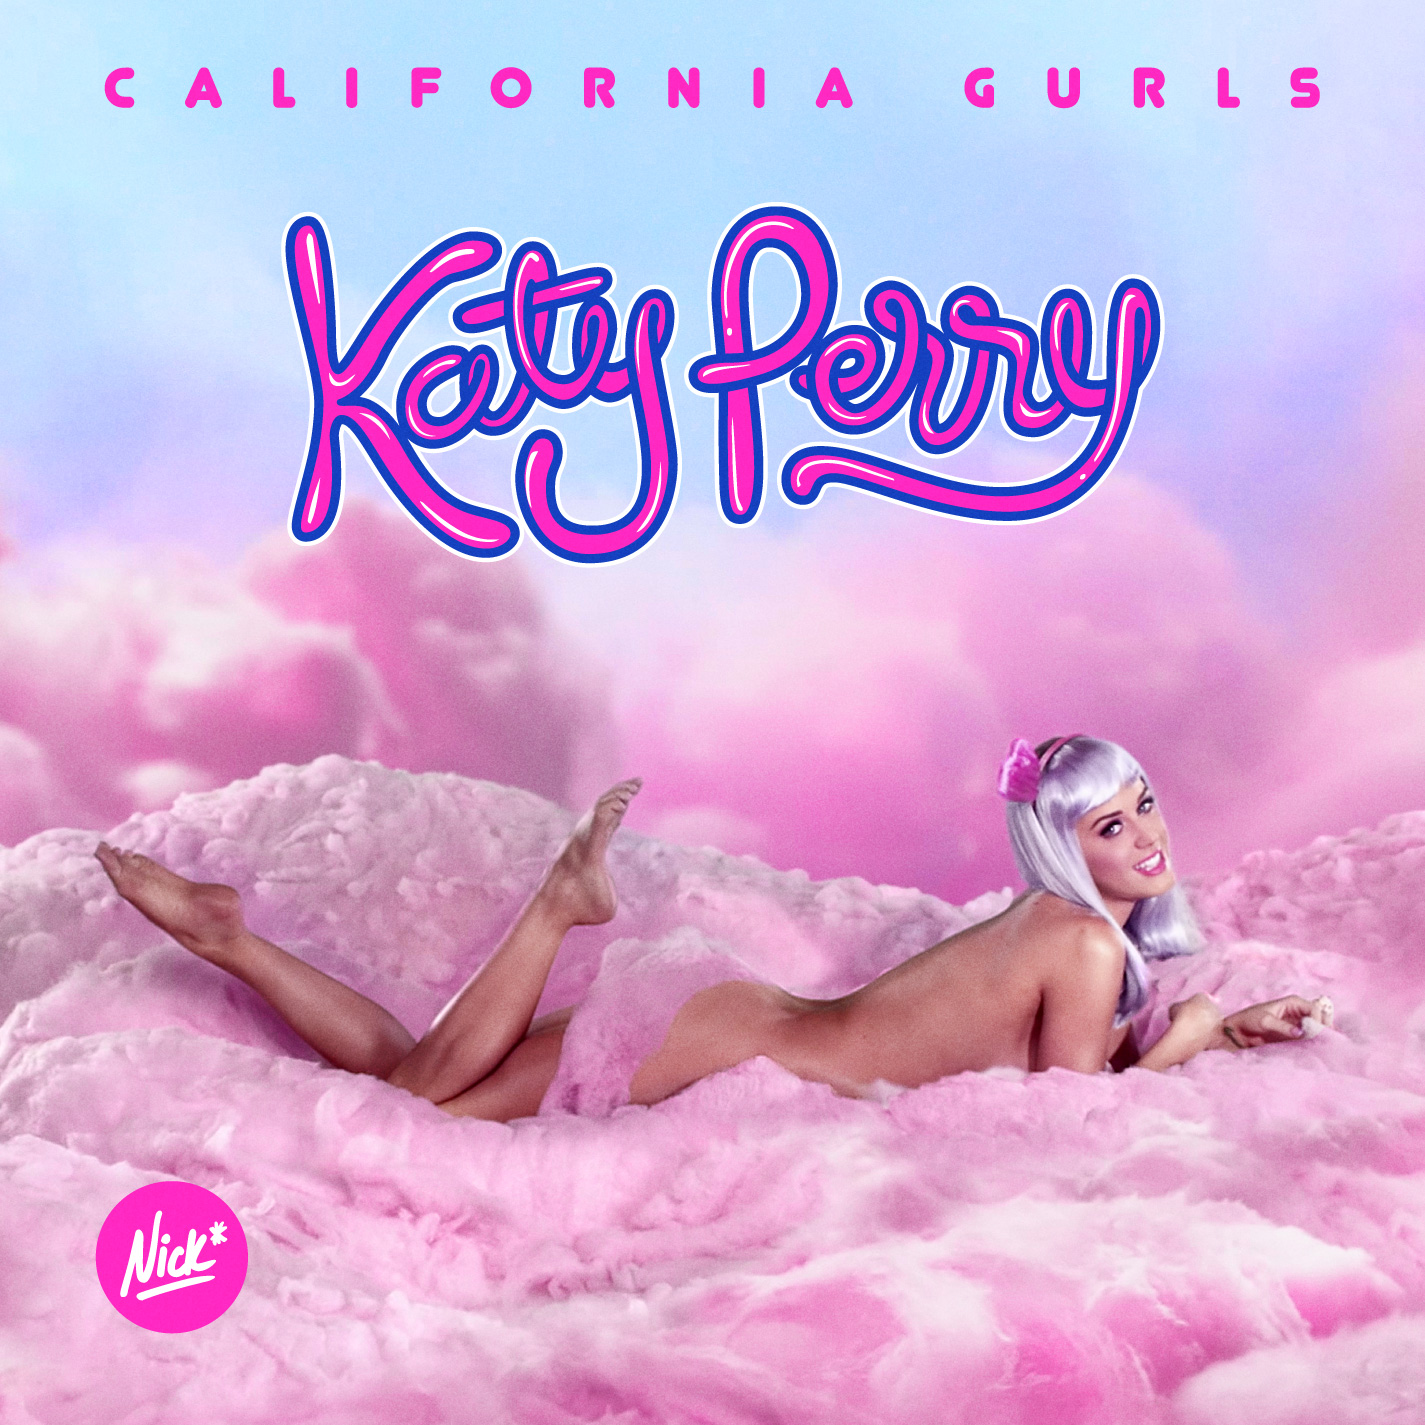 Katy Perry - California Gurls Nick* Cotton Candy Remix